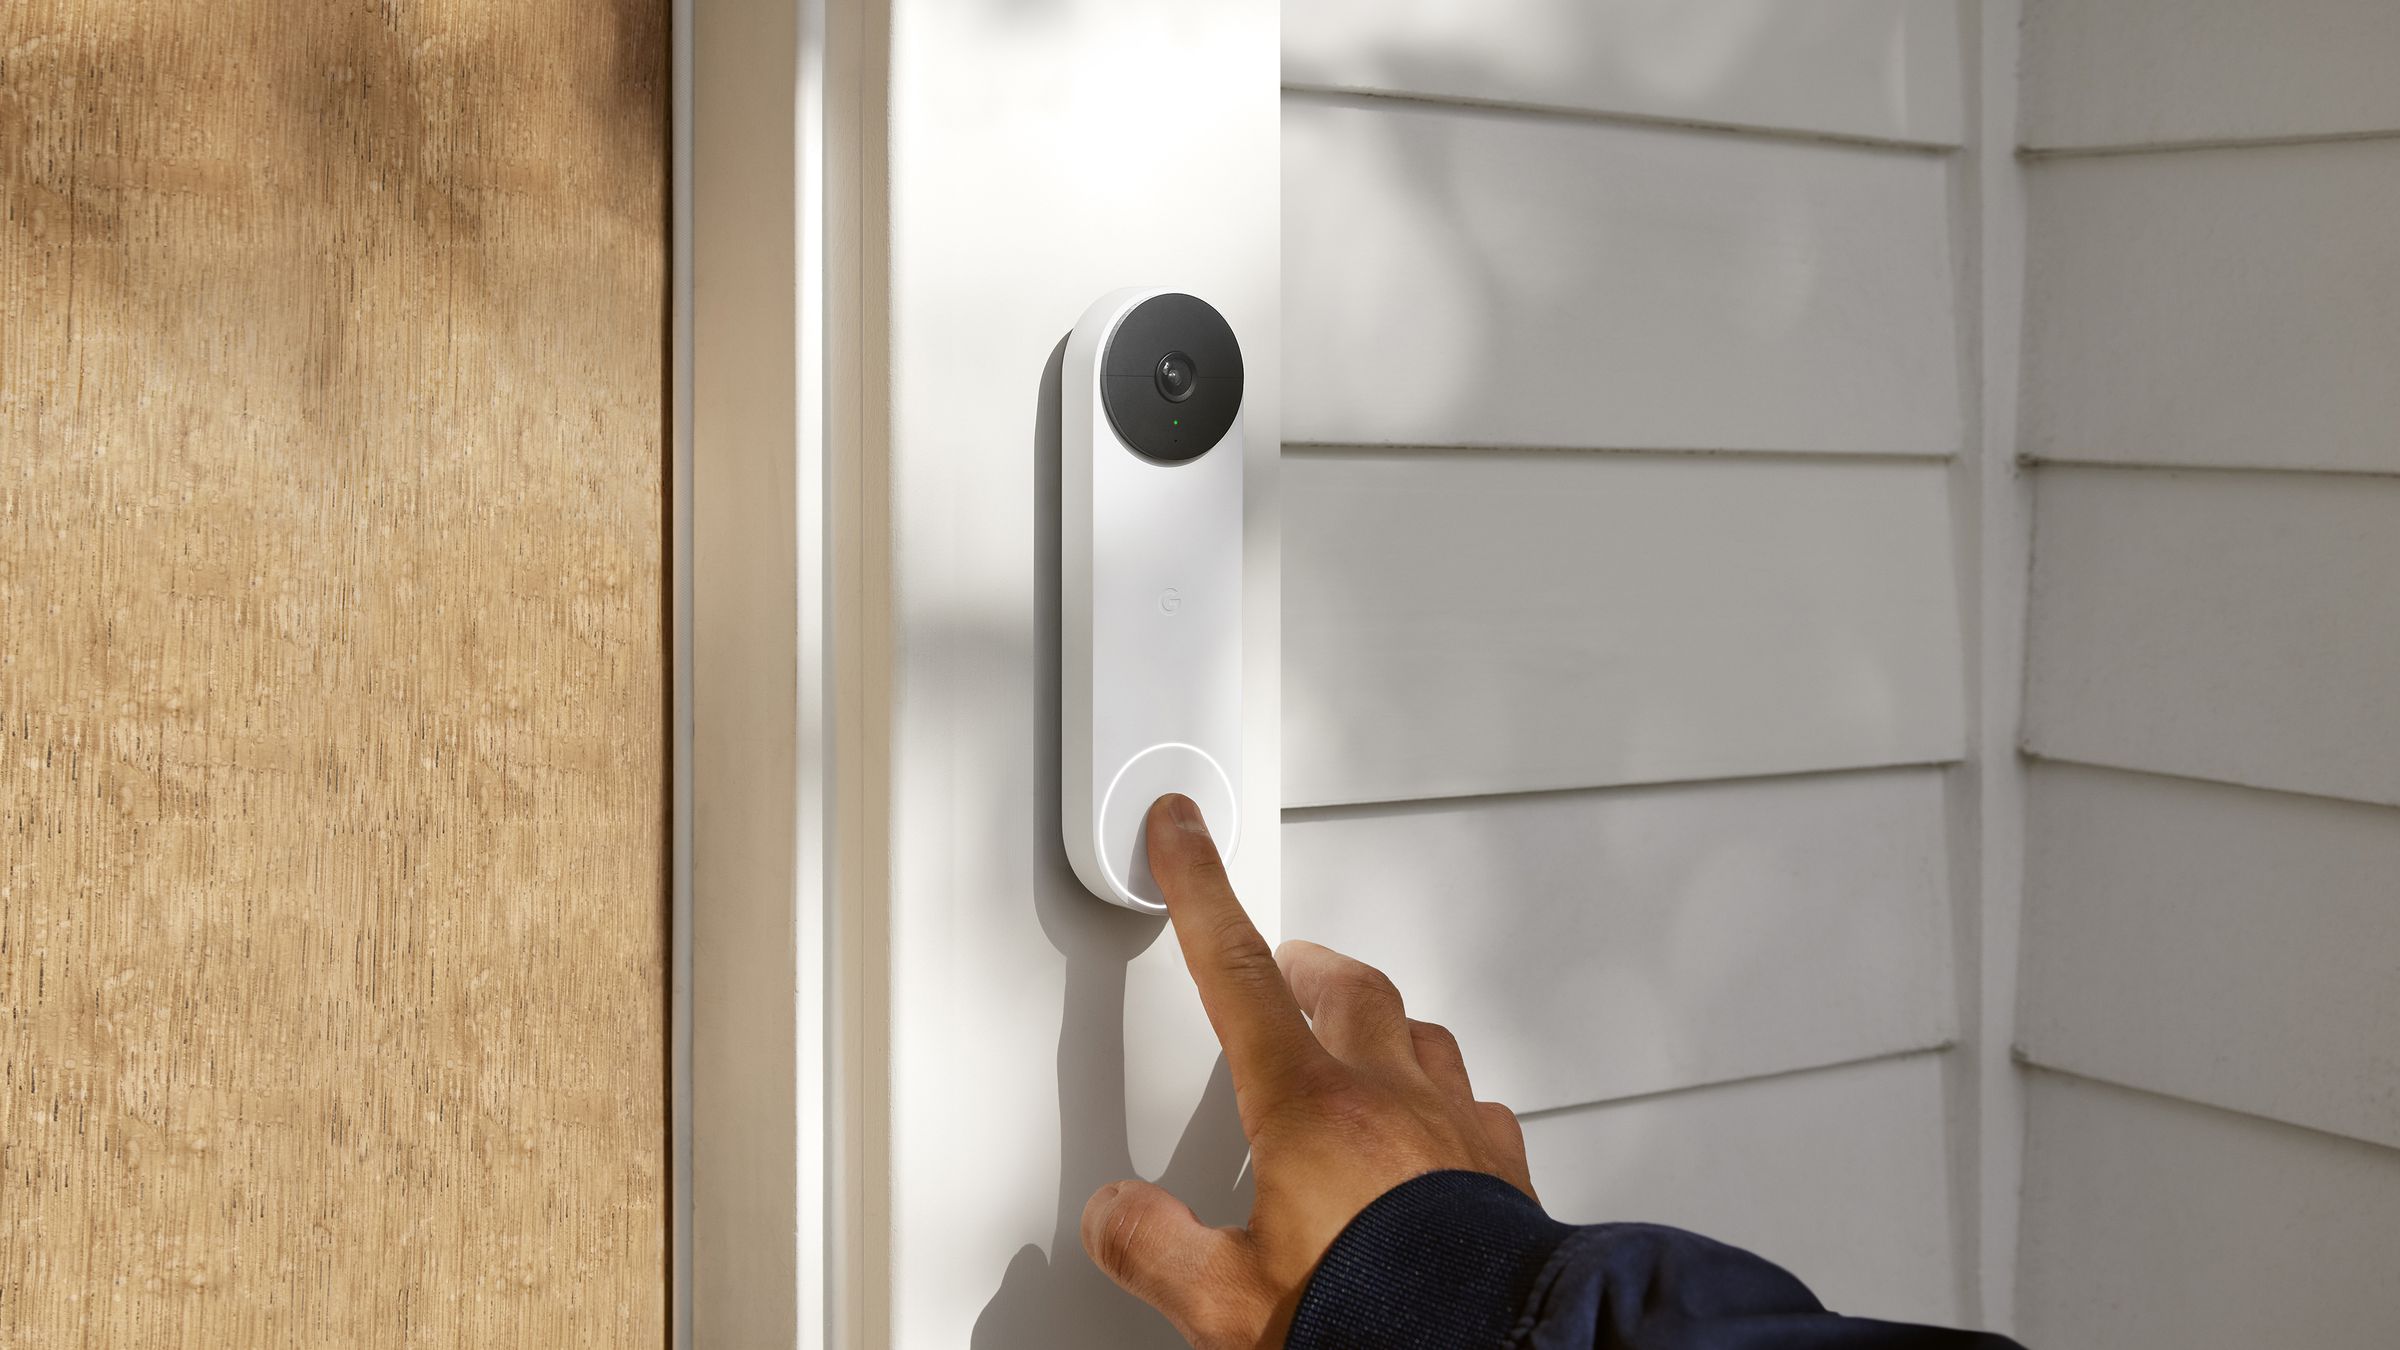 The Nest Doorbell is Google’s first battery-powered video doorbell.